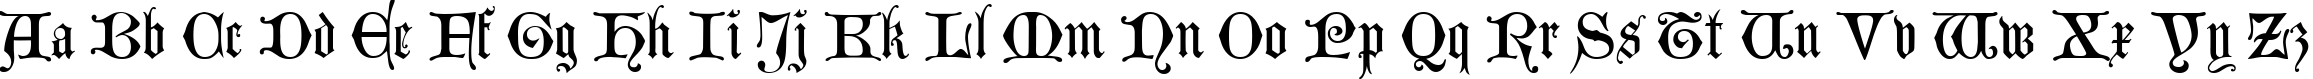 Пример написания английского алфавита шрифтом Lombardina Two